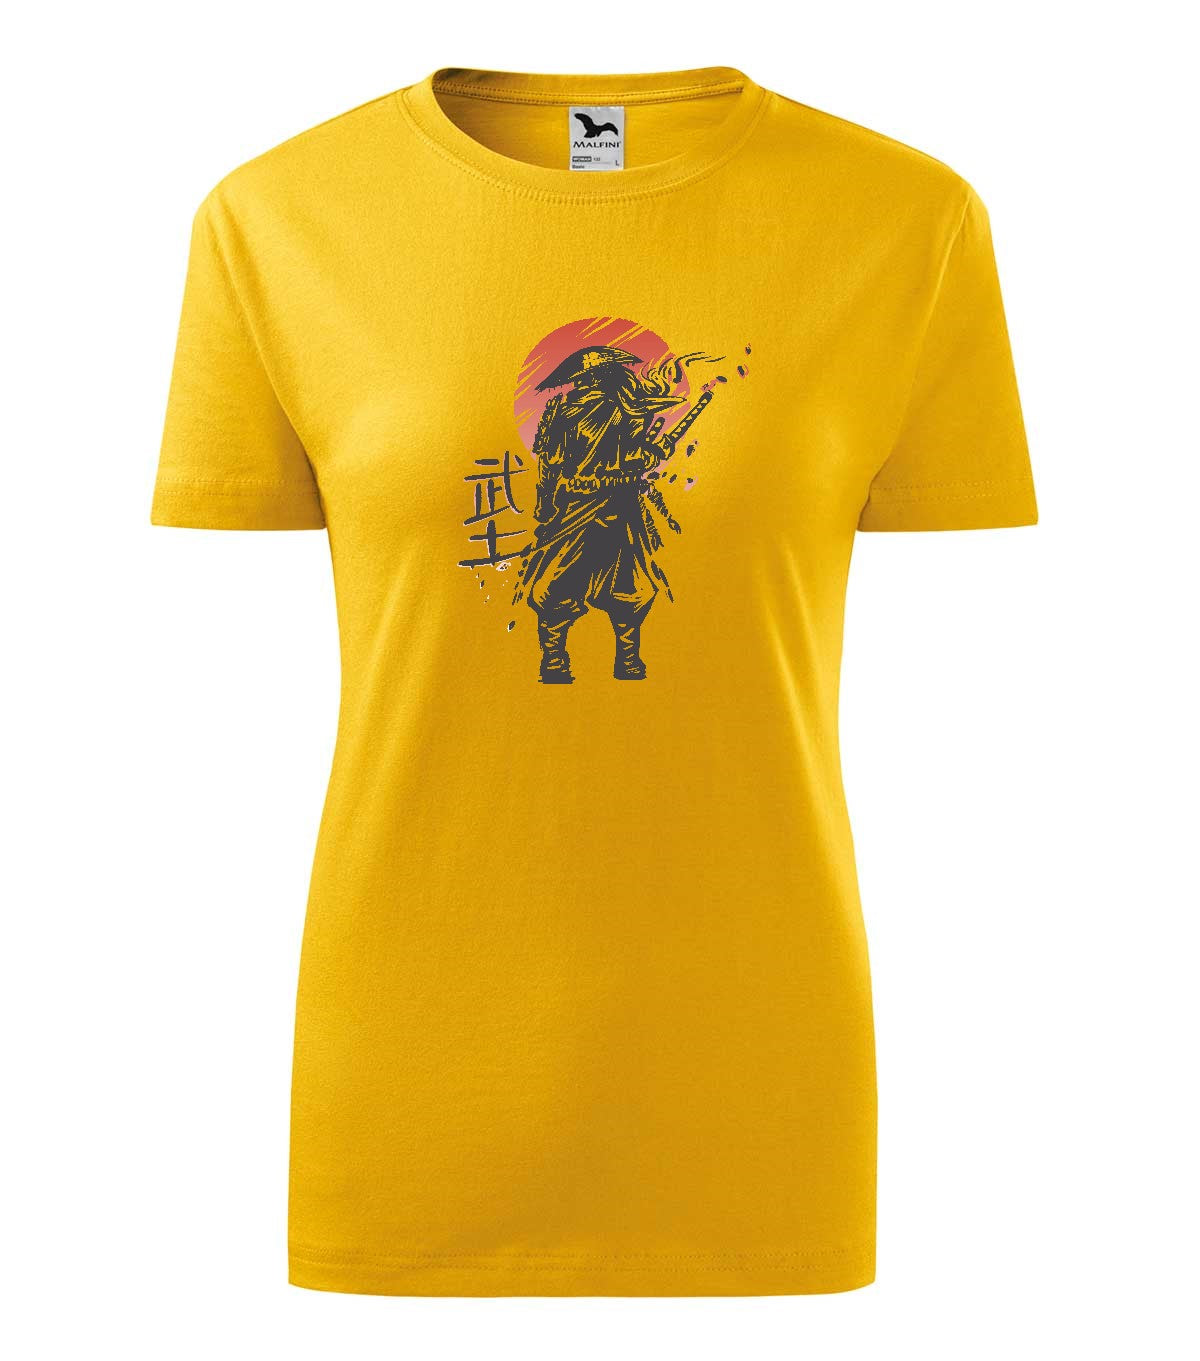 Samurai Warrior gyerek technikai póló